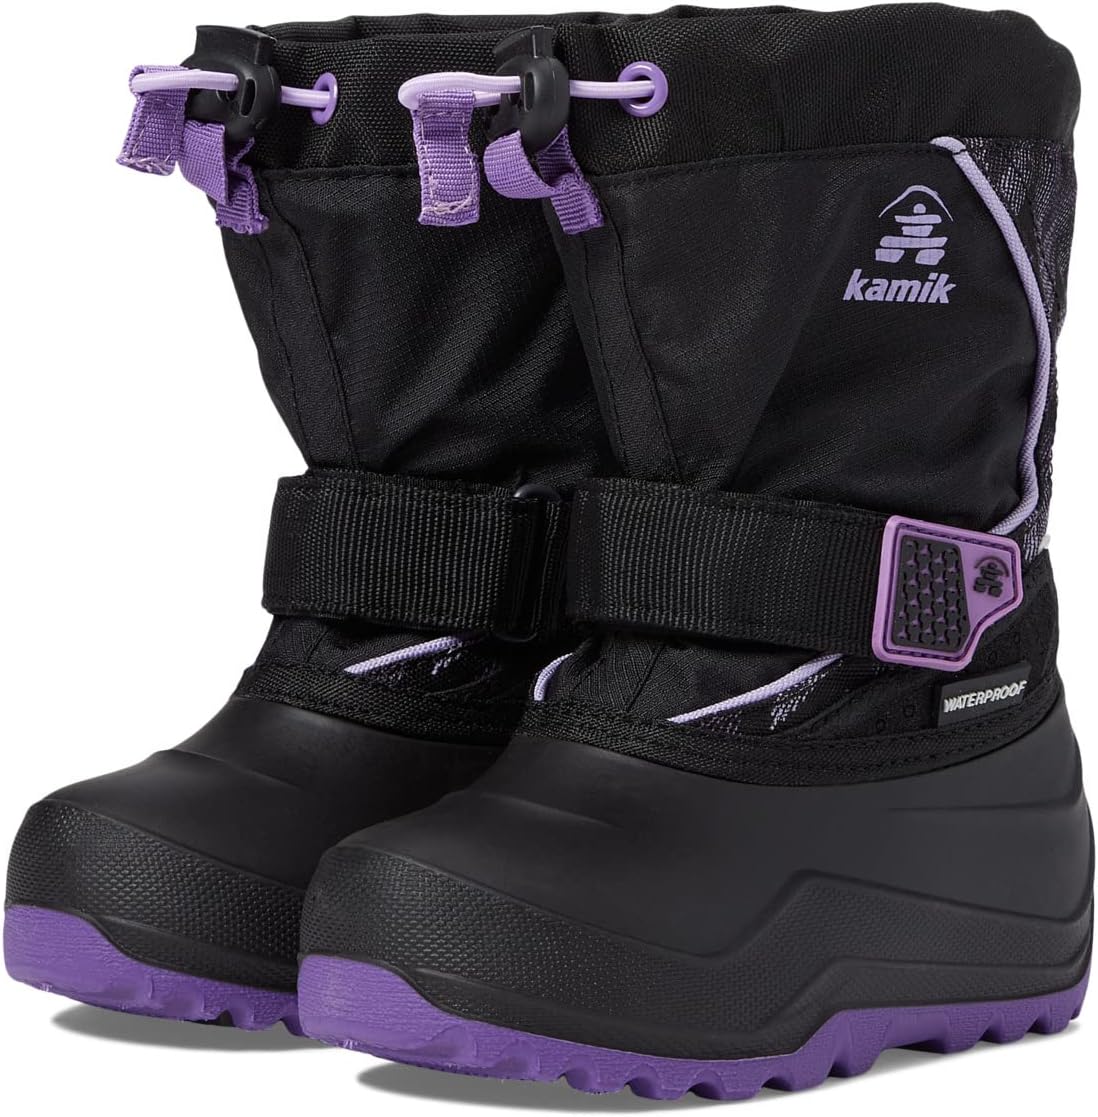 зимние ботинки snowfall p kamik цвет black purple Зимние ботинки Snowfall P Kamik, цвет Black/Purple